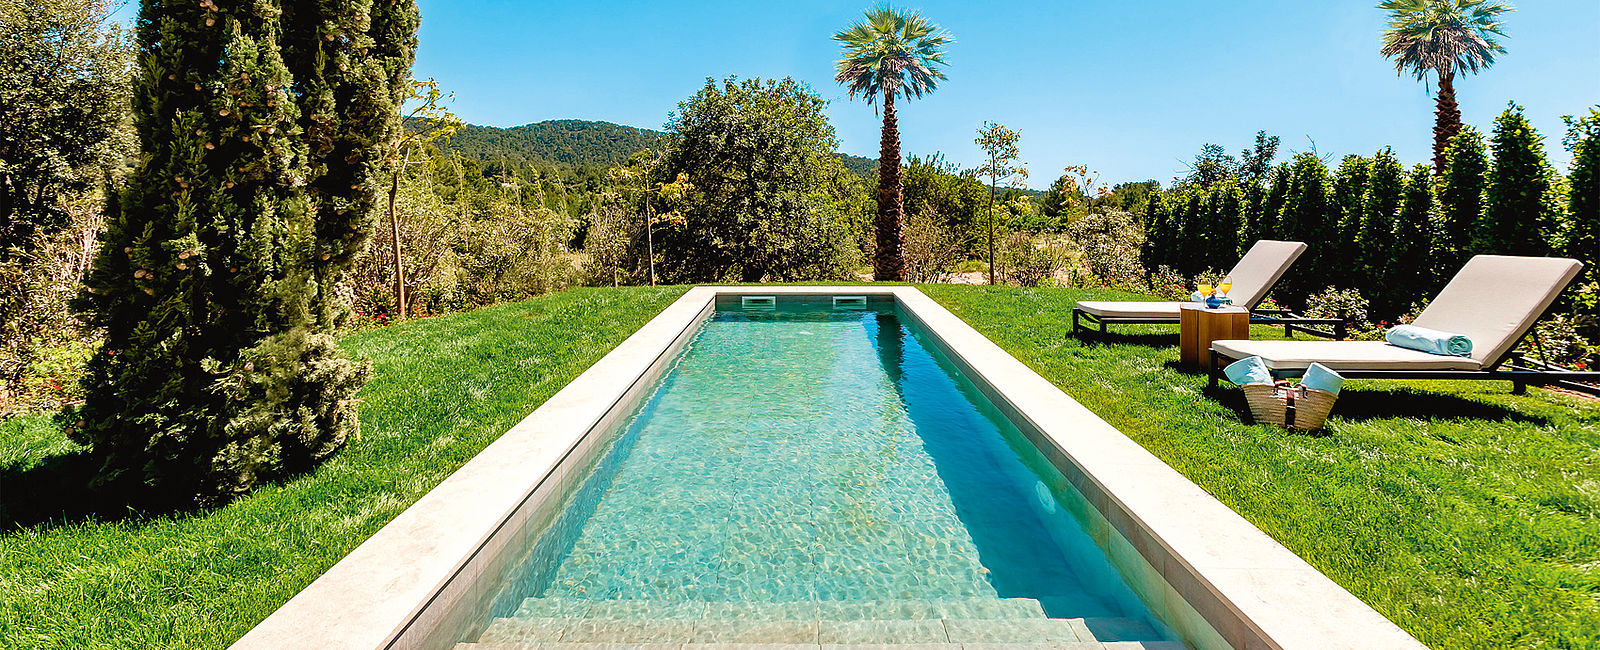 HOTEL NEWS
 Pool-Position auf Mallorca 
